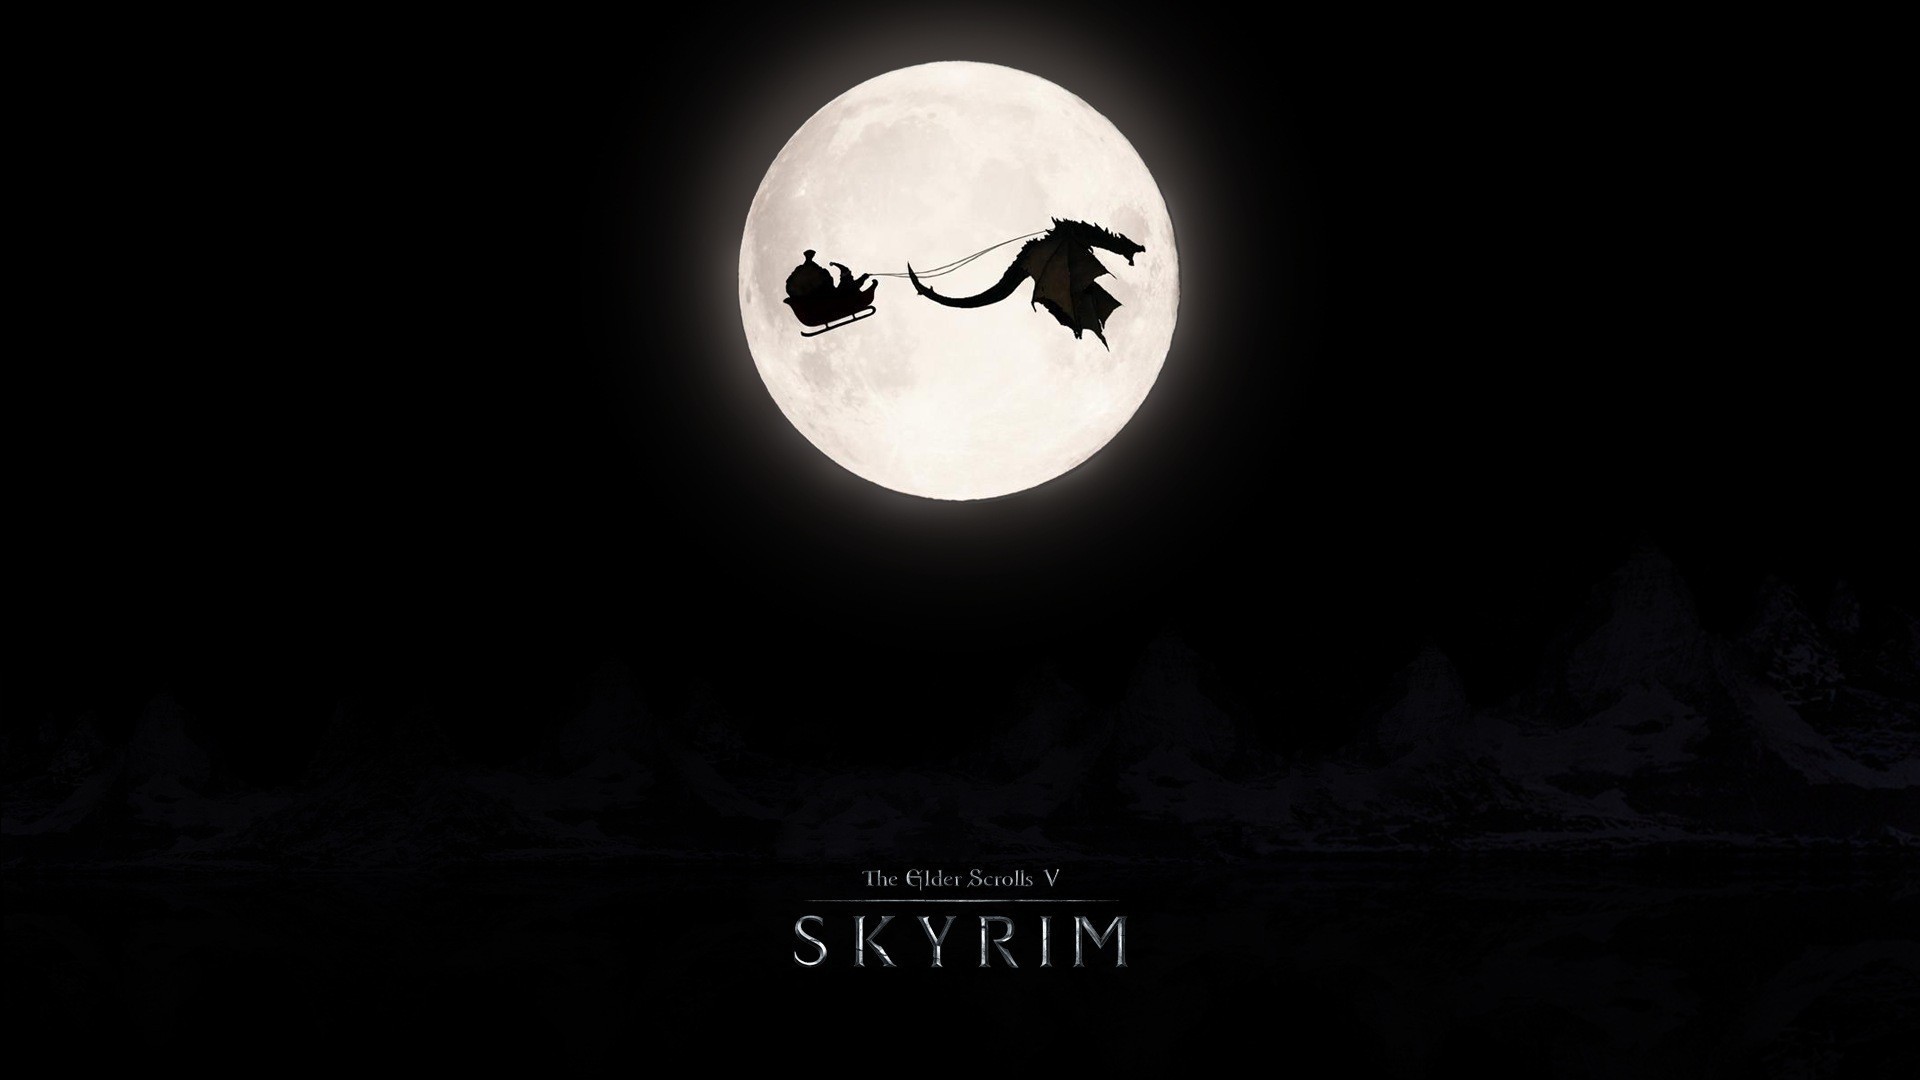 Santa Claus, The Elder Scrolls V: Skyrim, Dragon, Moon Wallpaper